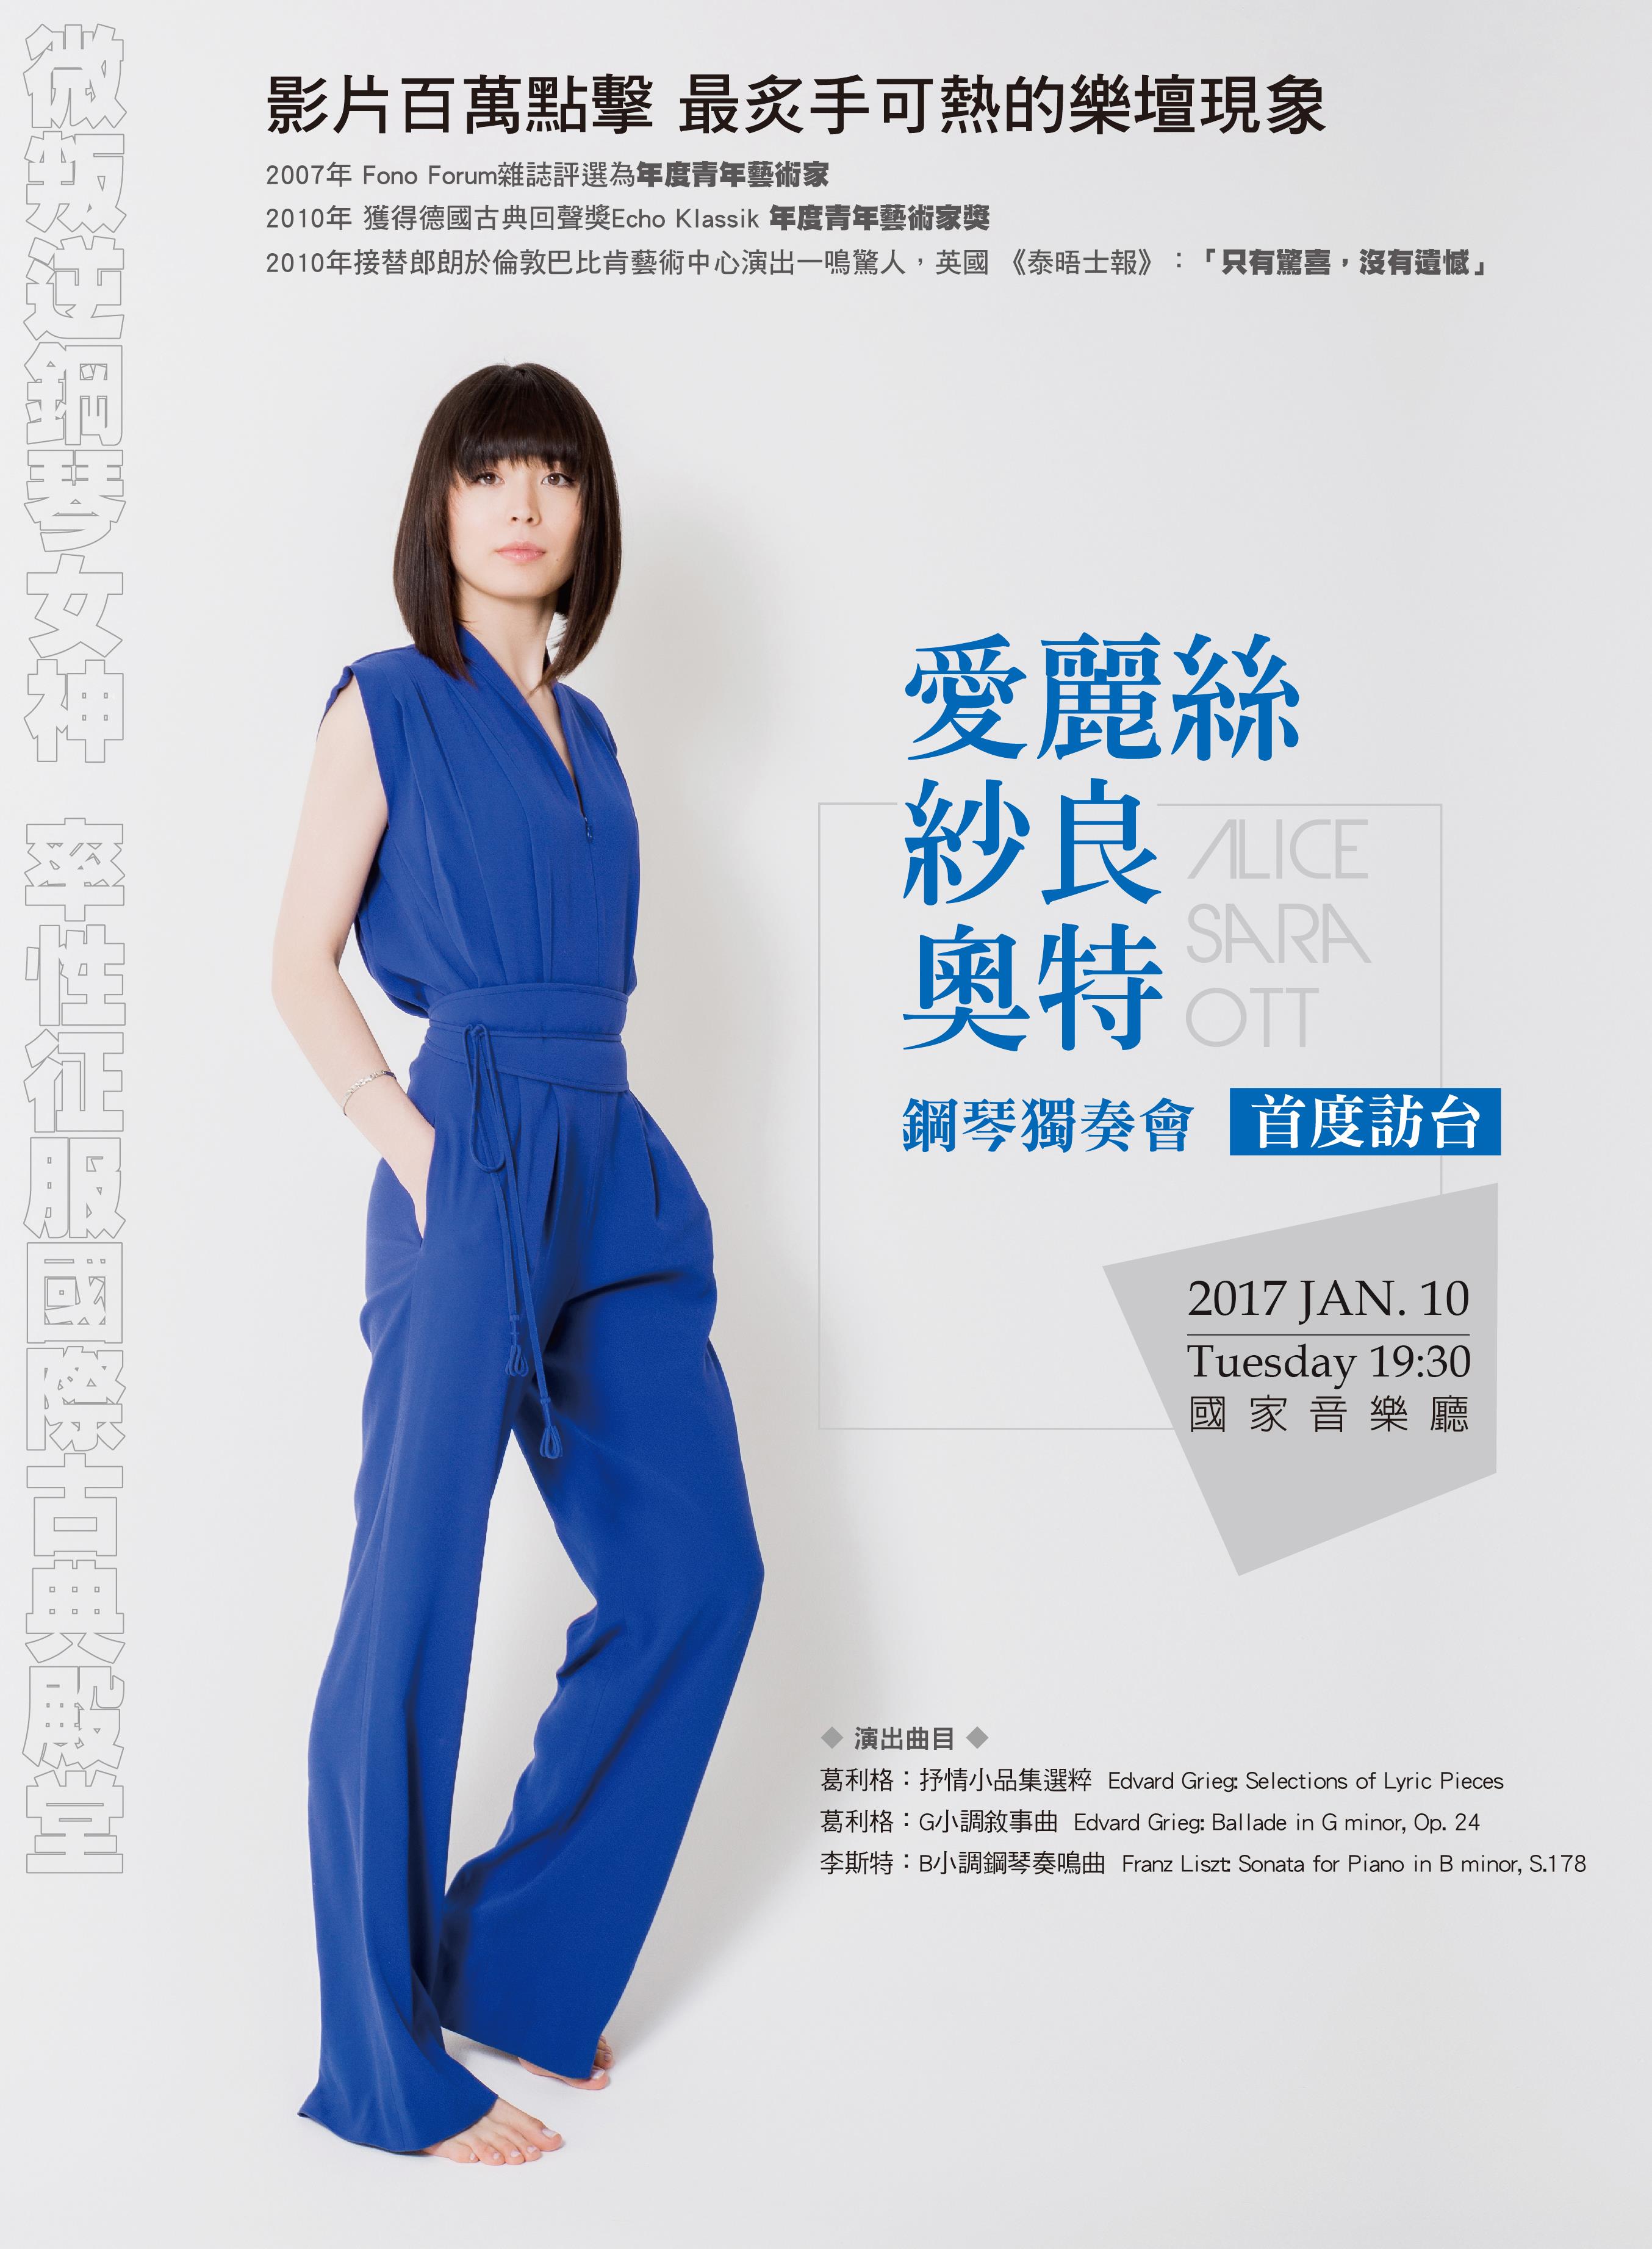 Alice Sara Ott Piano Recital 台湾